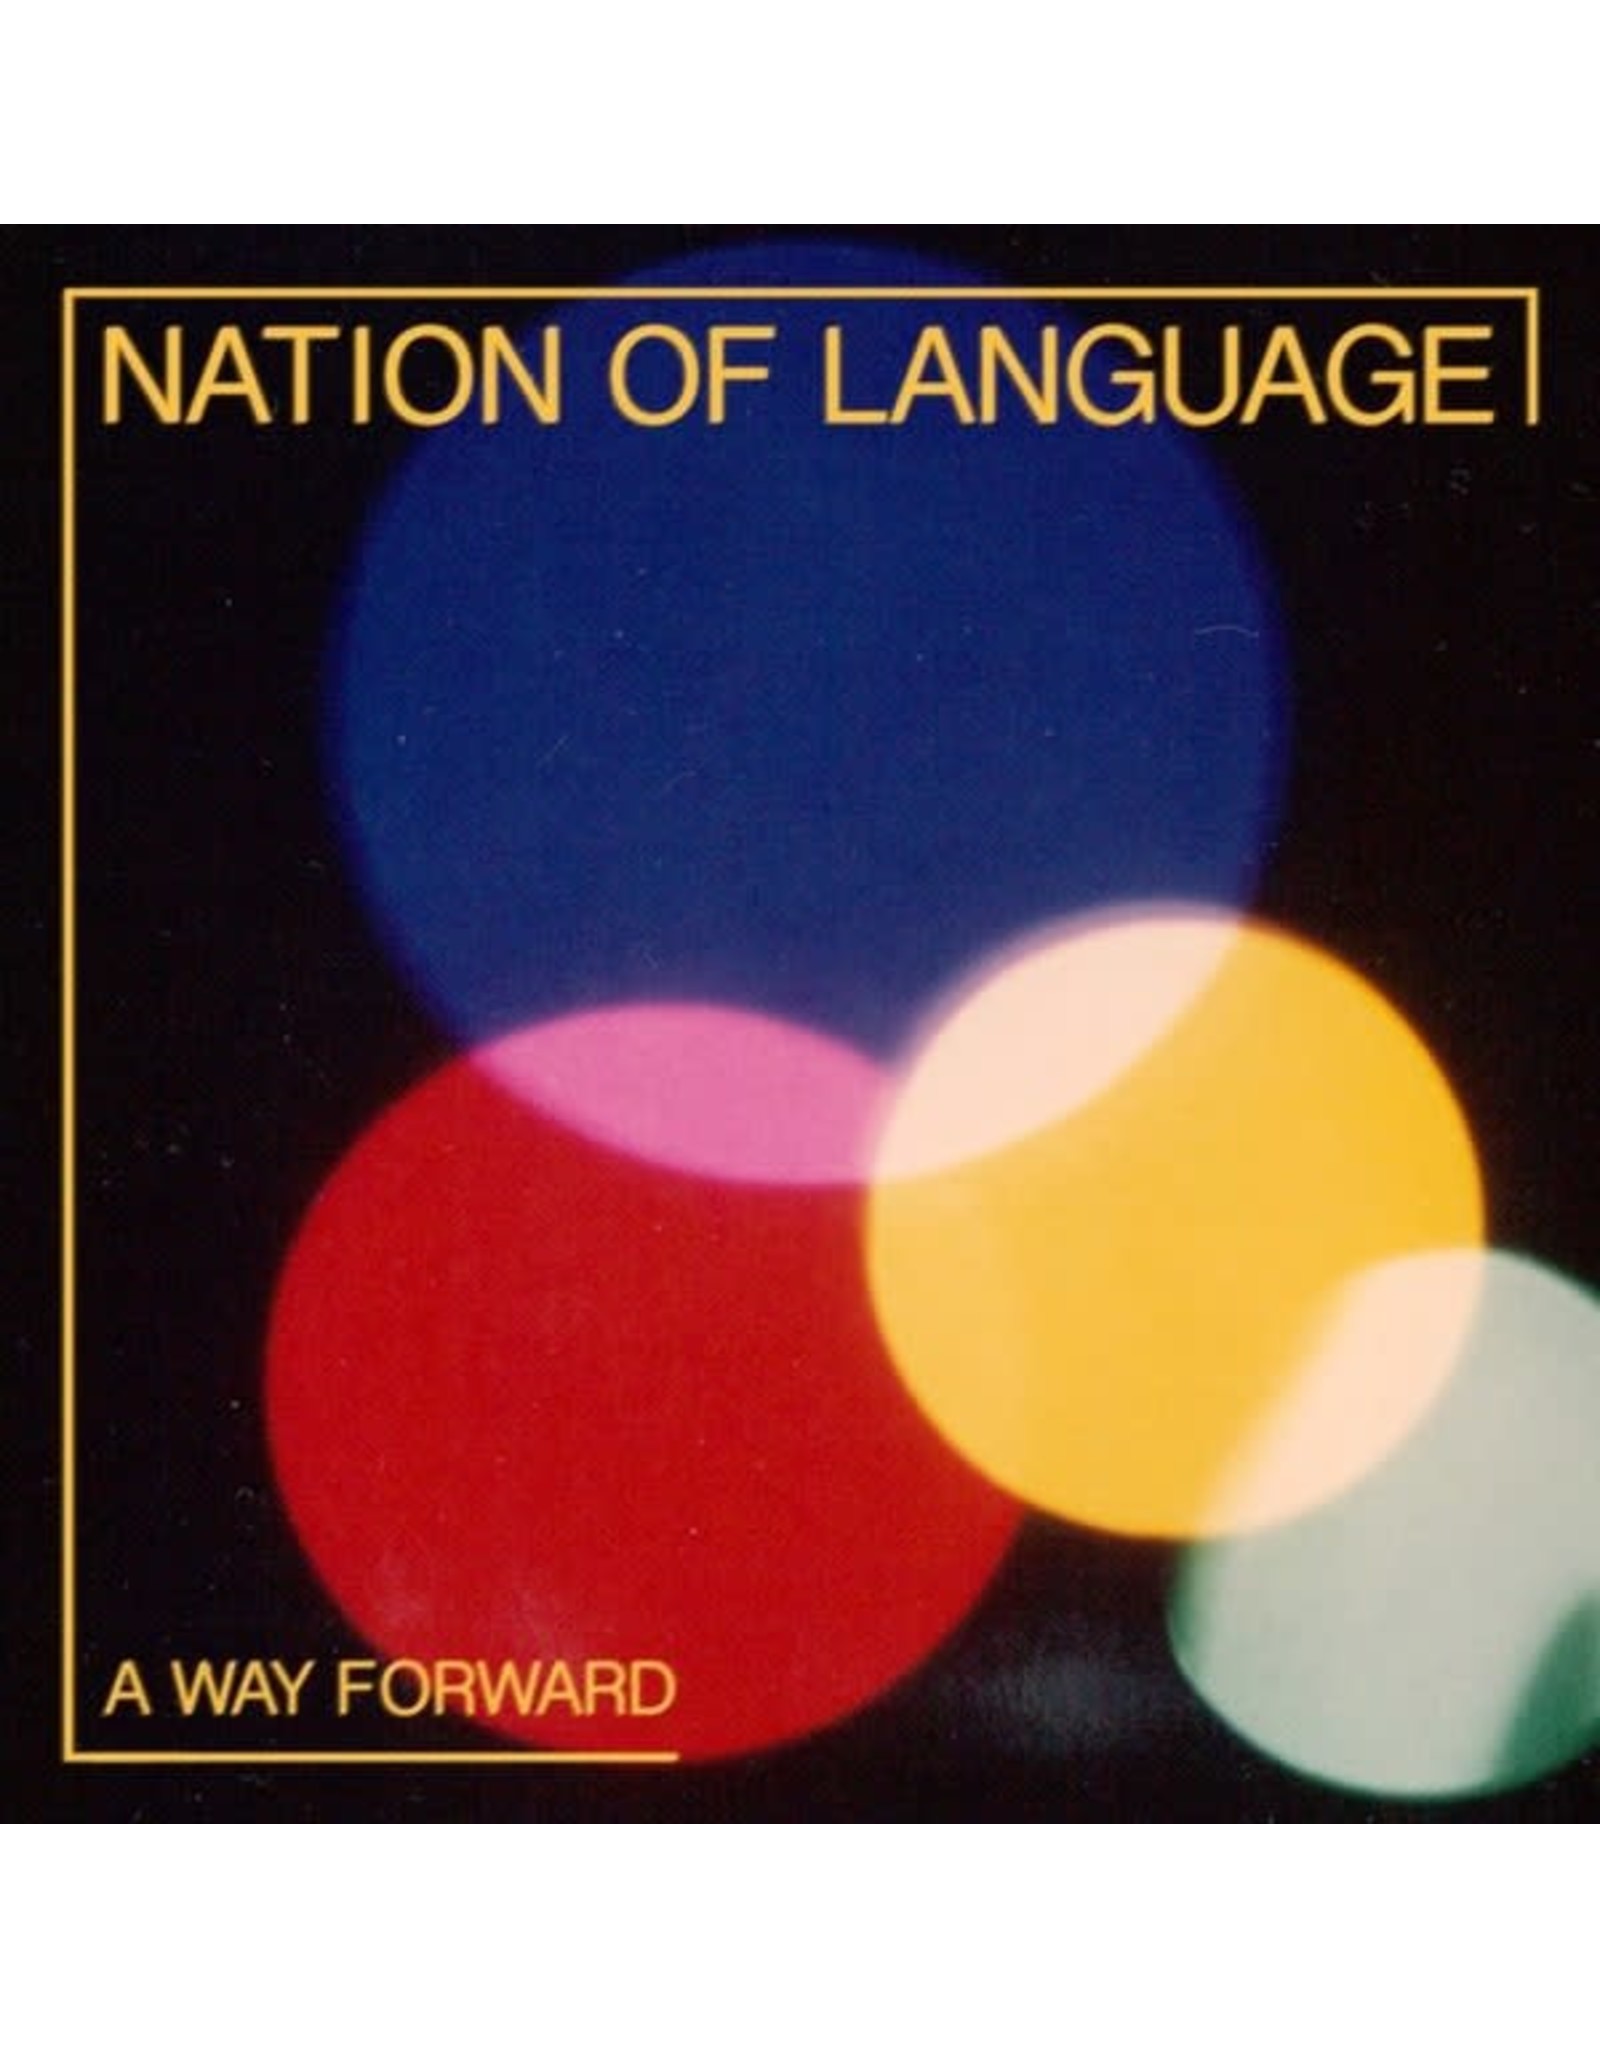 Nation Of Language - A Way Forward LP